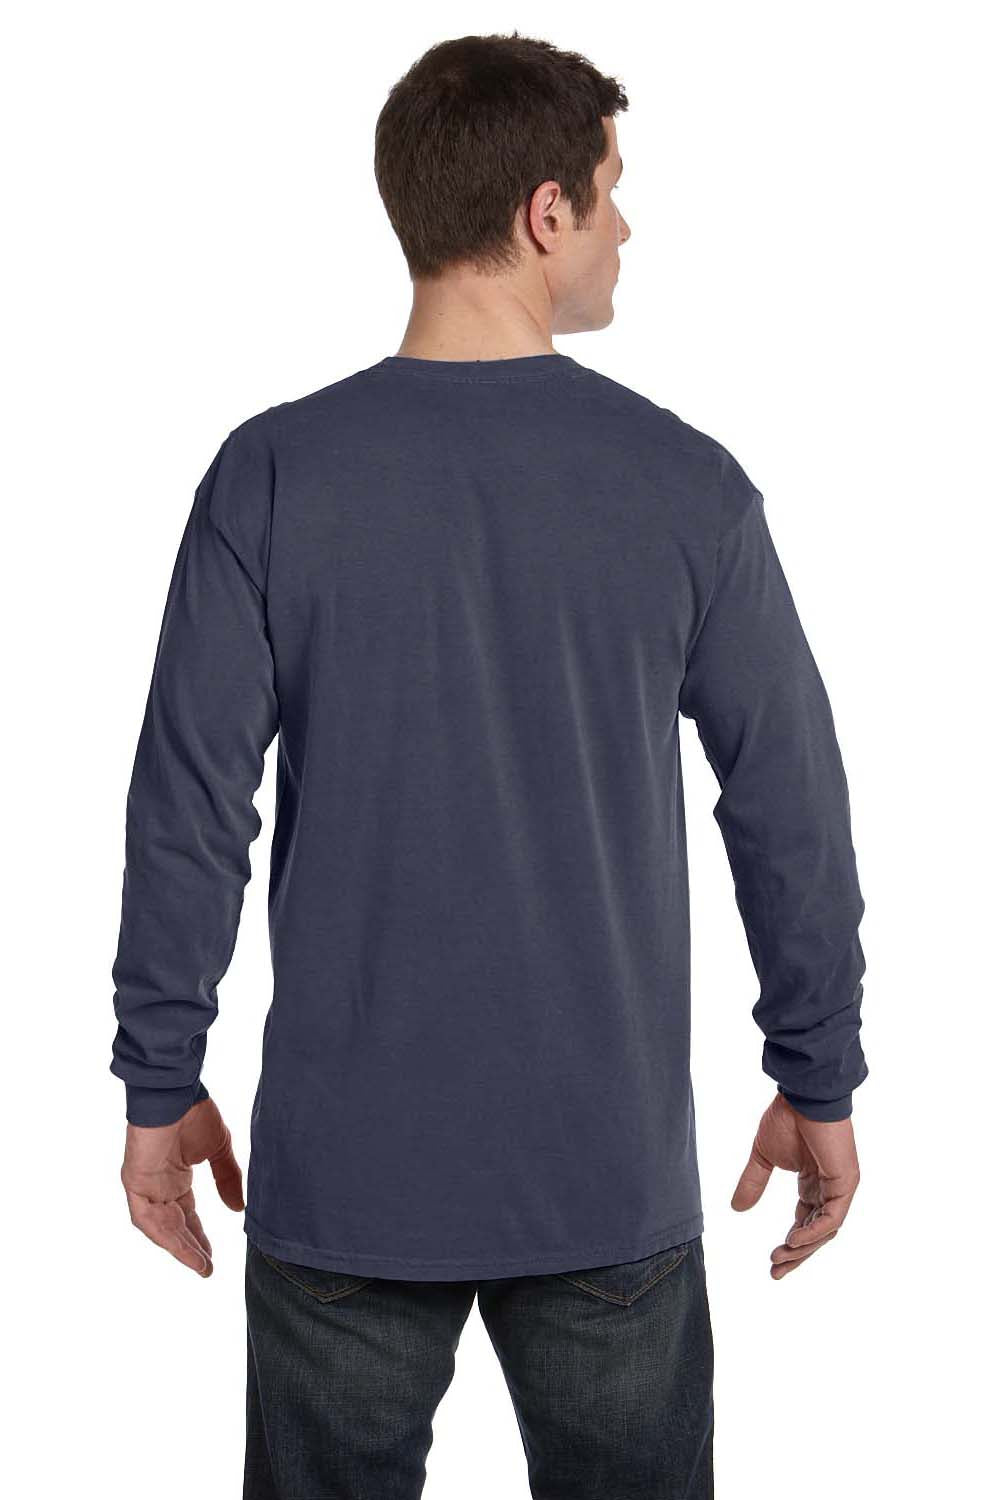 Comfort Colors C6014 Mens Long Sleeve Crewneck T-Shirt Denim Blue Back